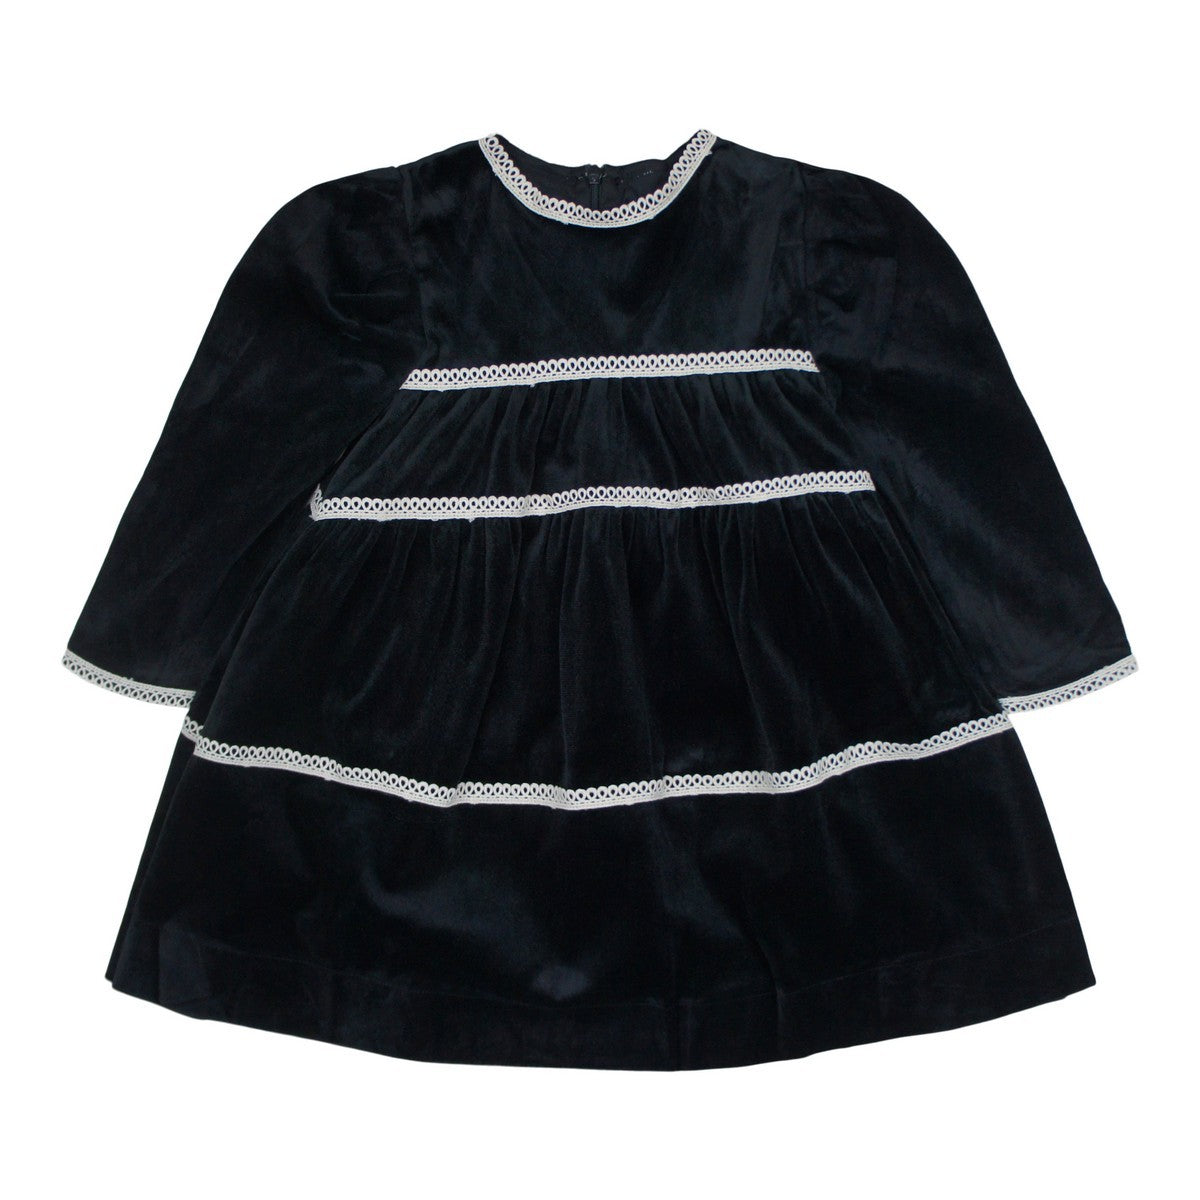 Black velvet Layered Lace Dress